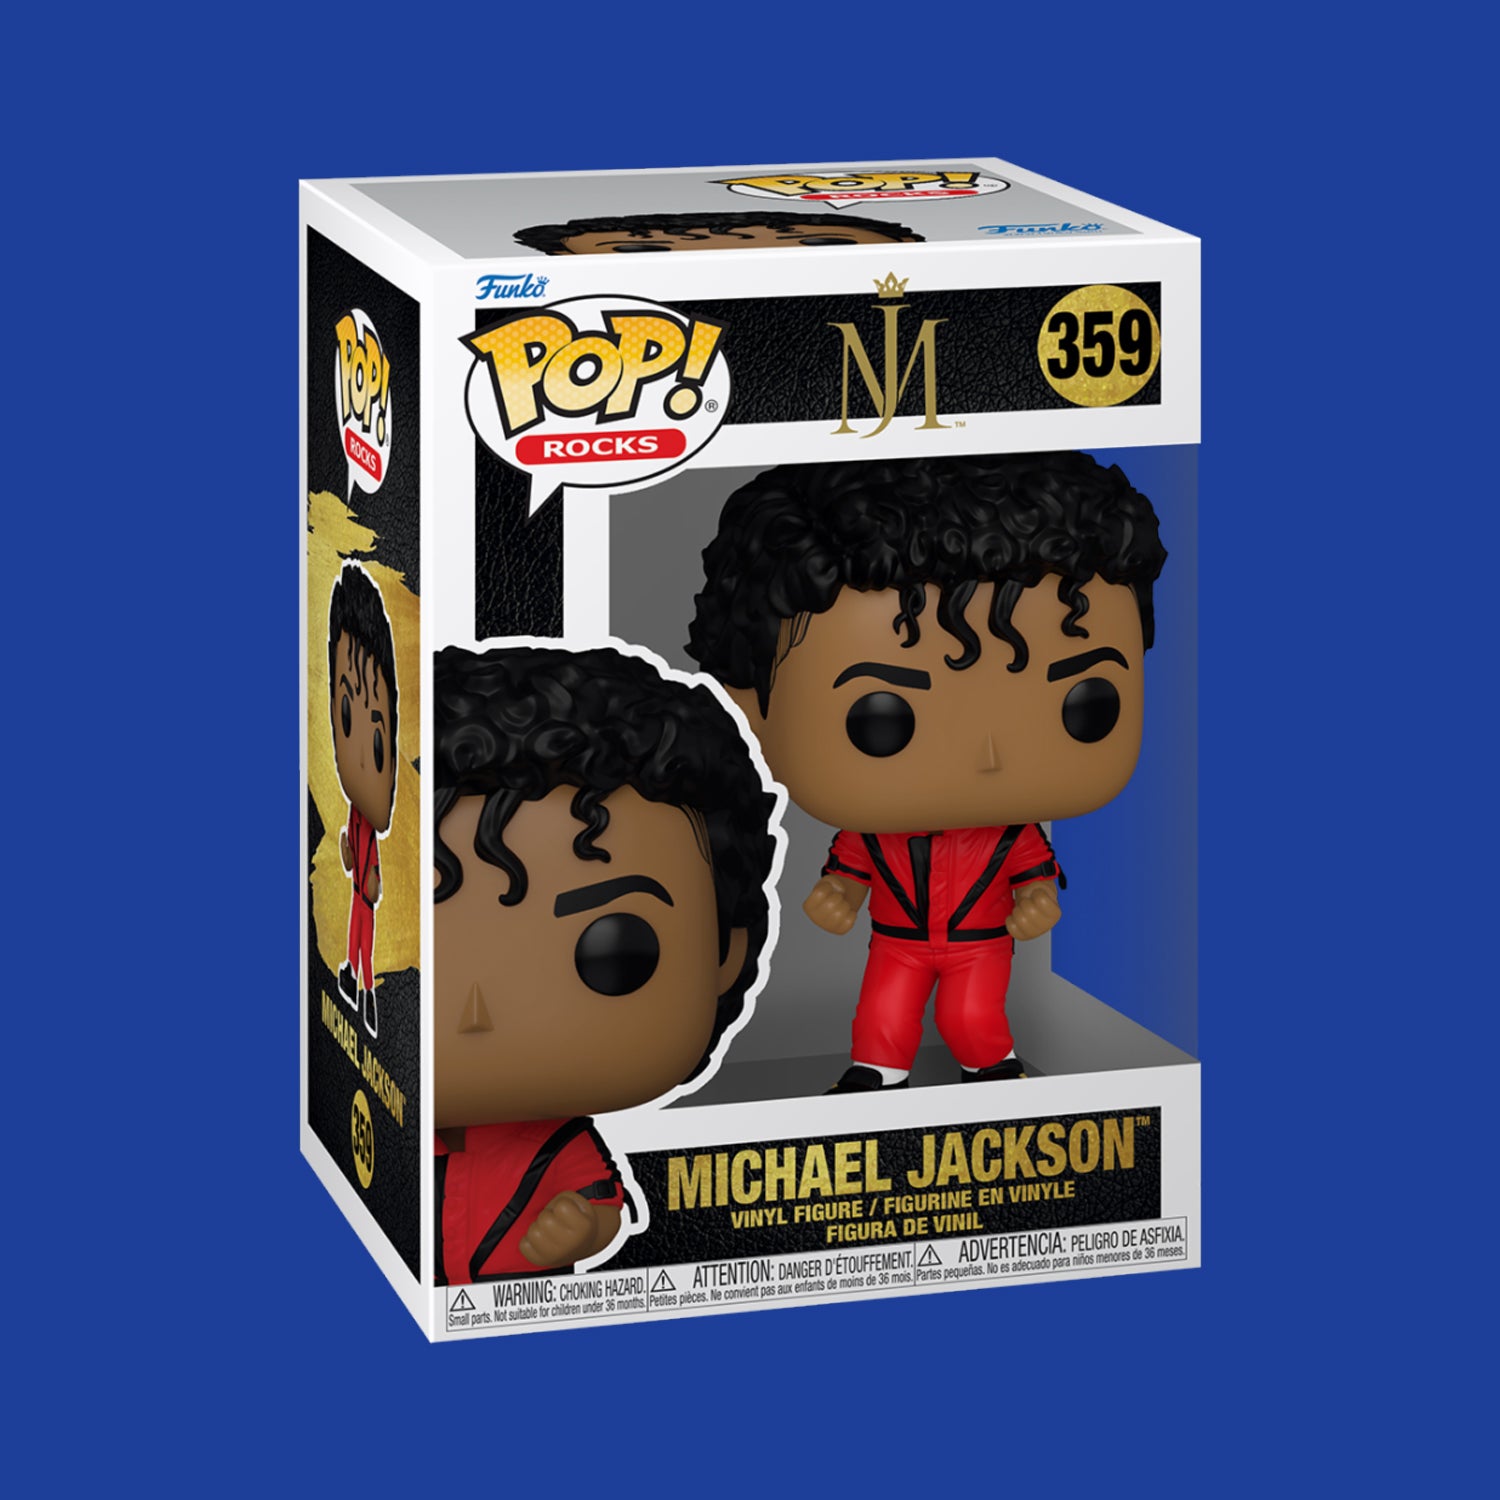 Michael Jackson (Thrillerl) Funko Pop! (359) Michael Jackson